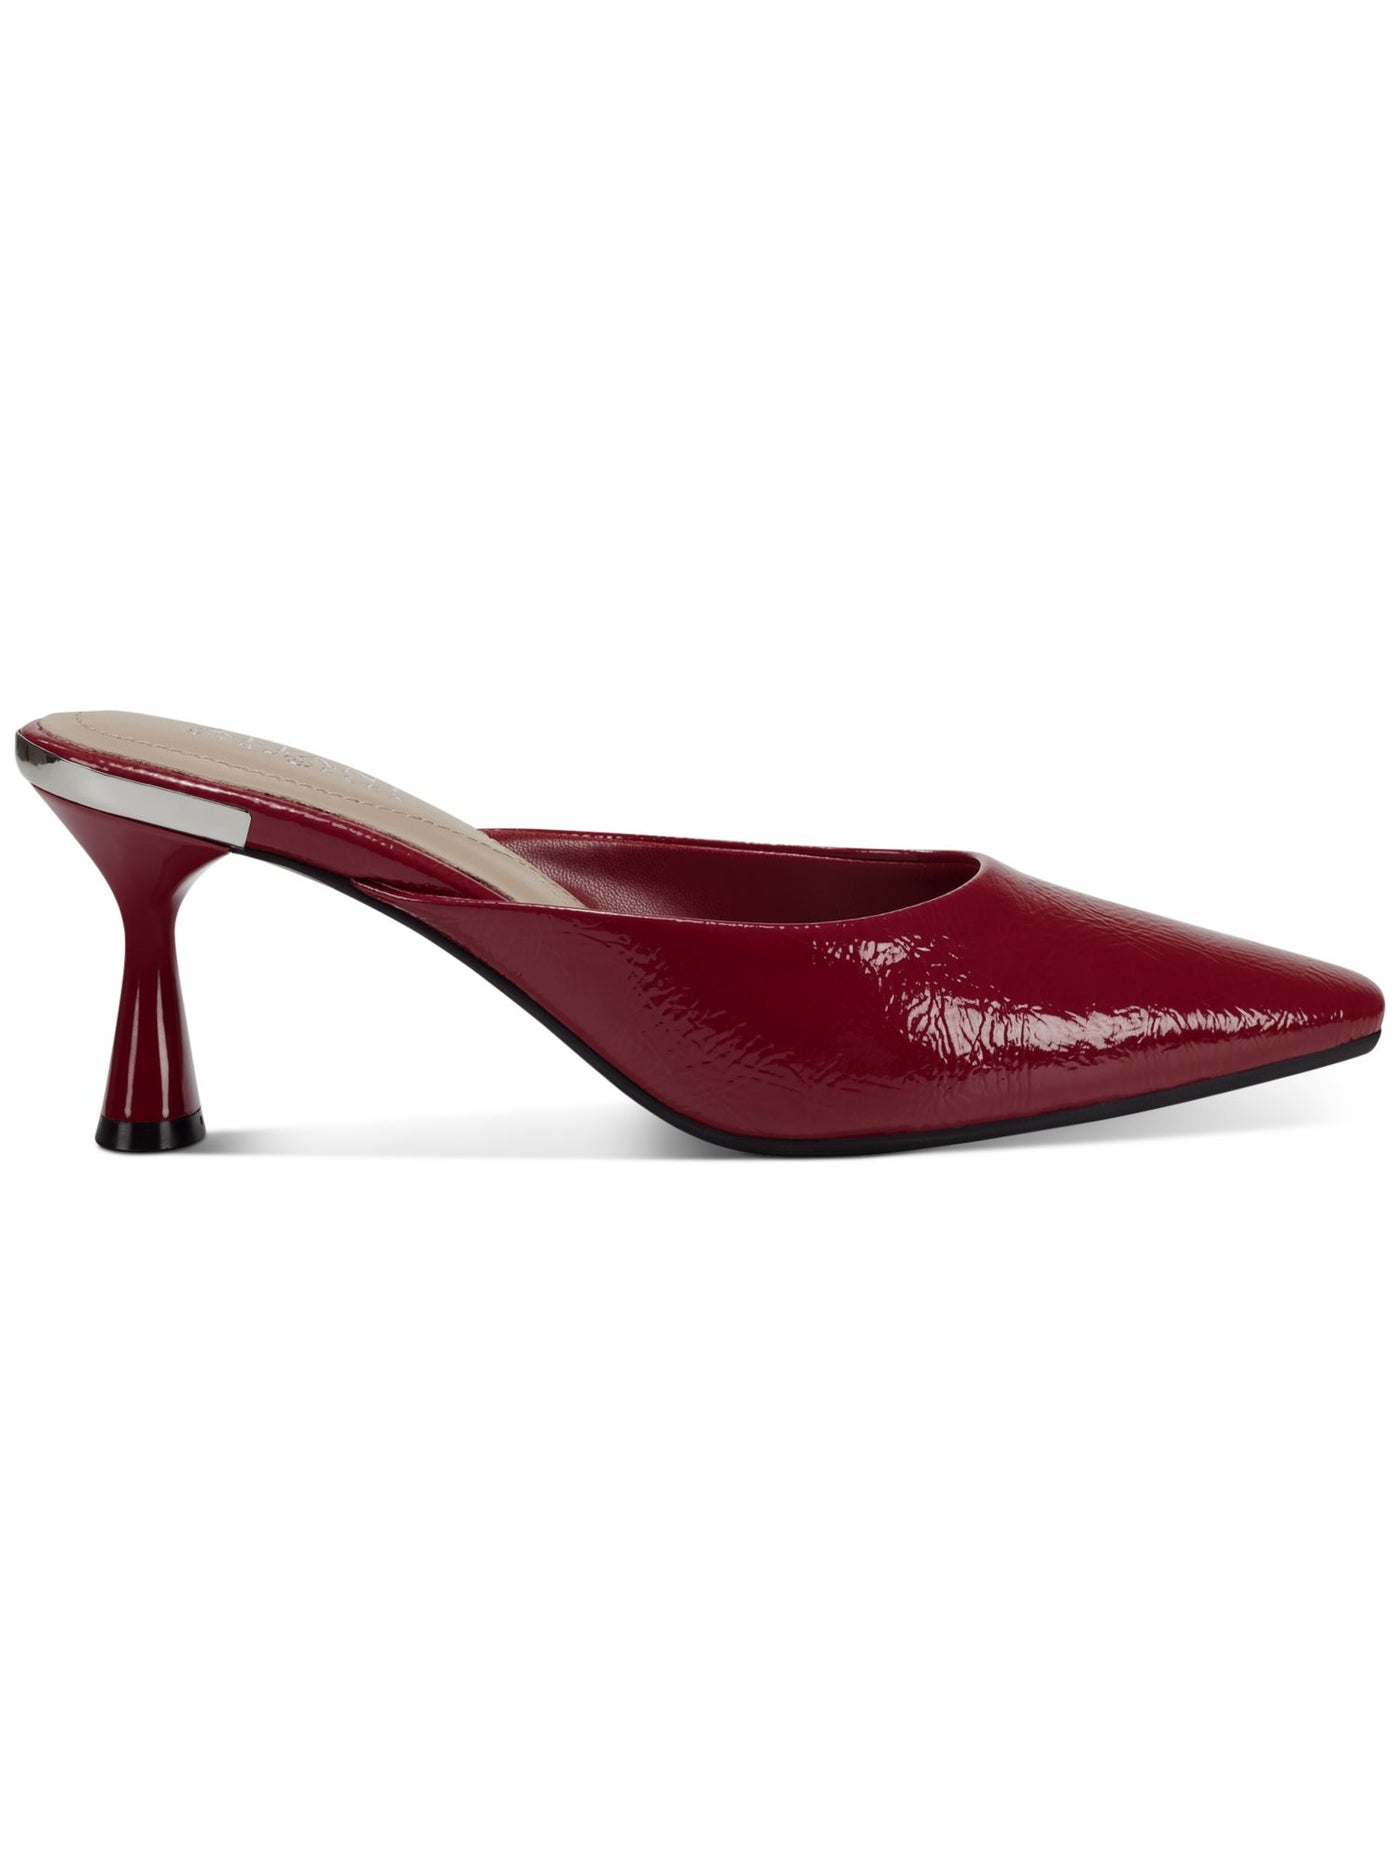 ALFANI Womens Red Crinkle Comfort Cecilia Square Toe Flare Slip On Heeled Mules Shoes 8 M